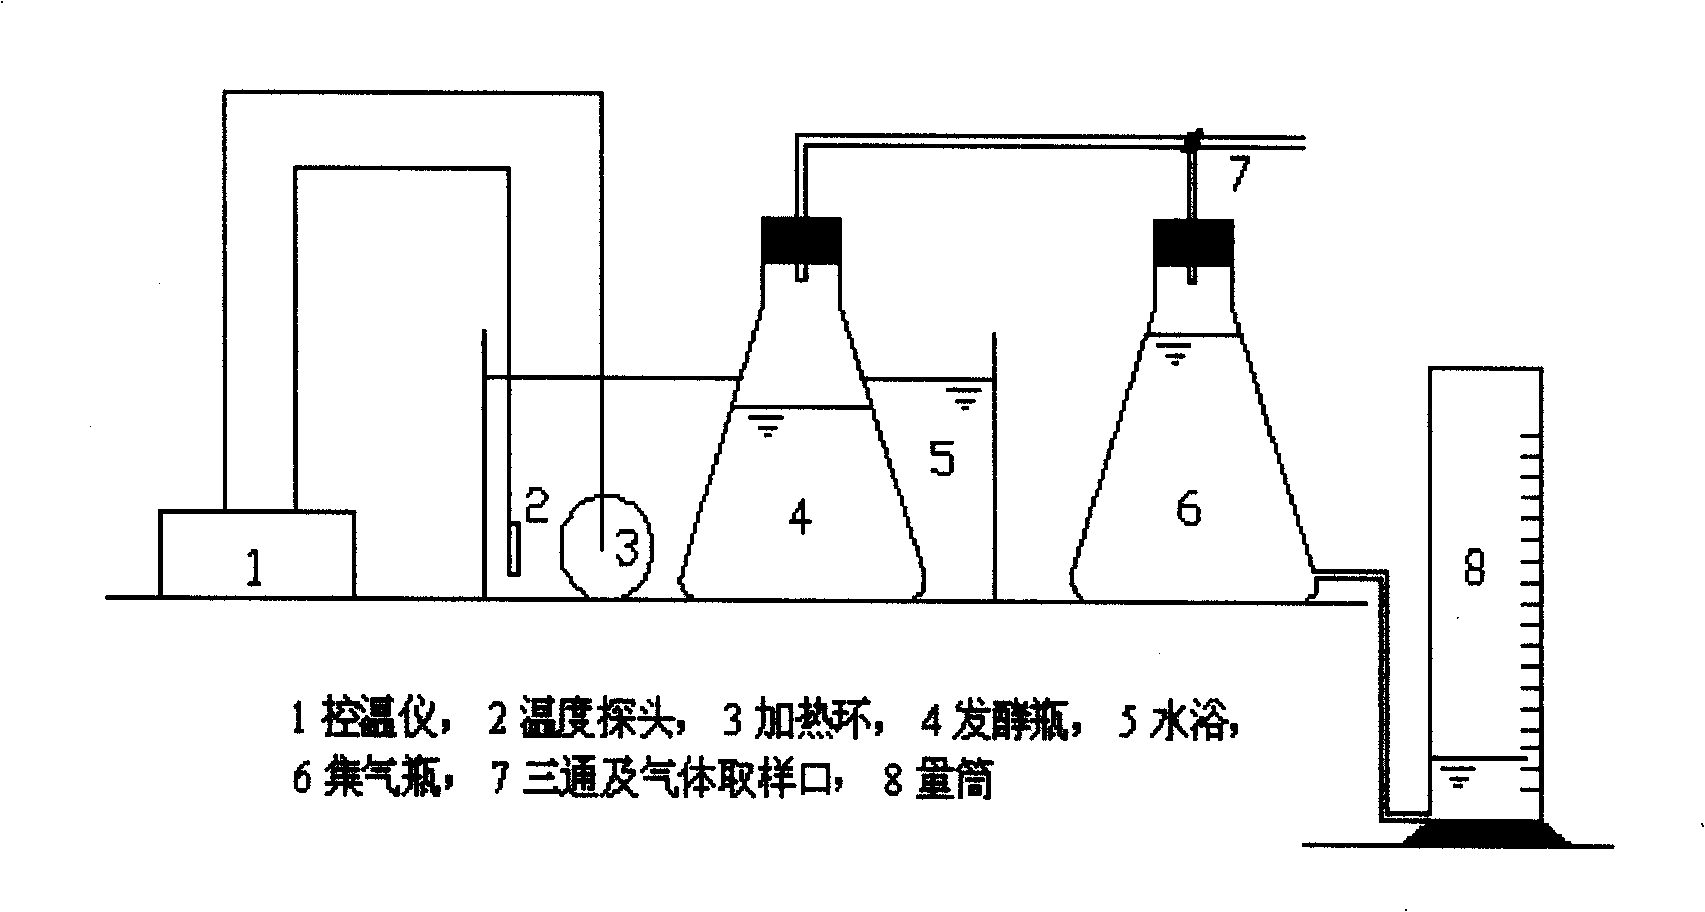 Method for applying pretreatment of amylase to swine waste marsh gas fermentation